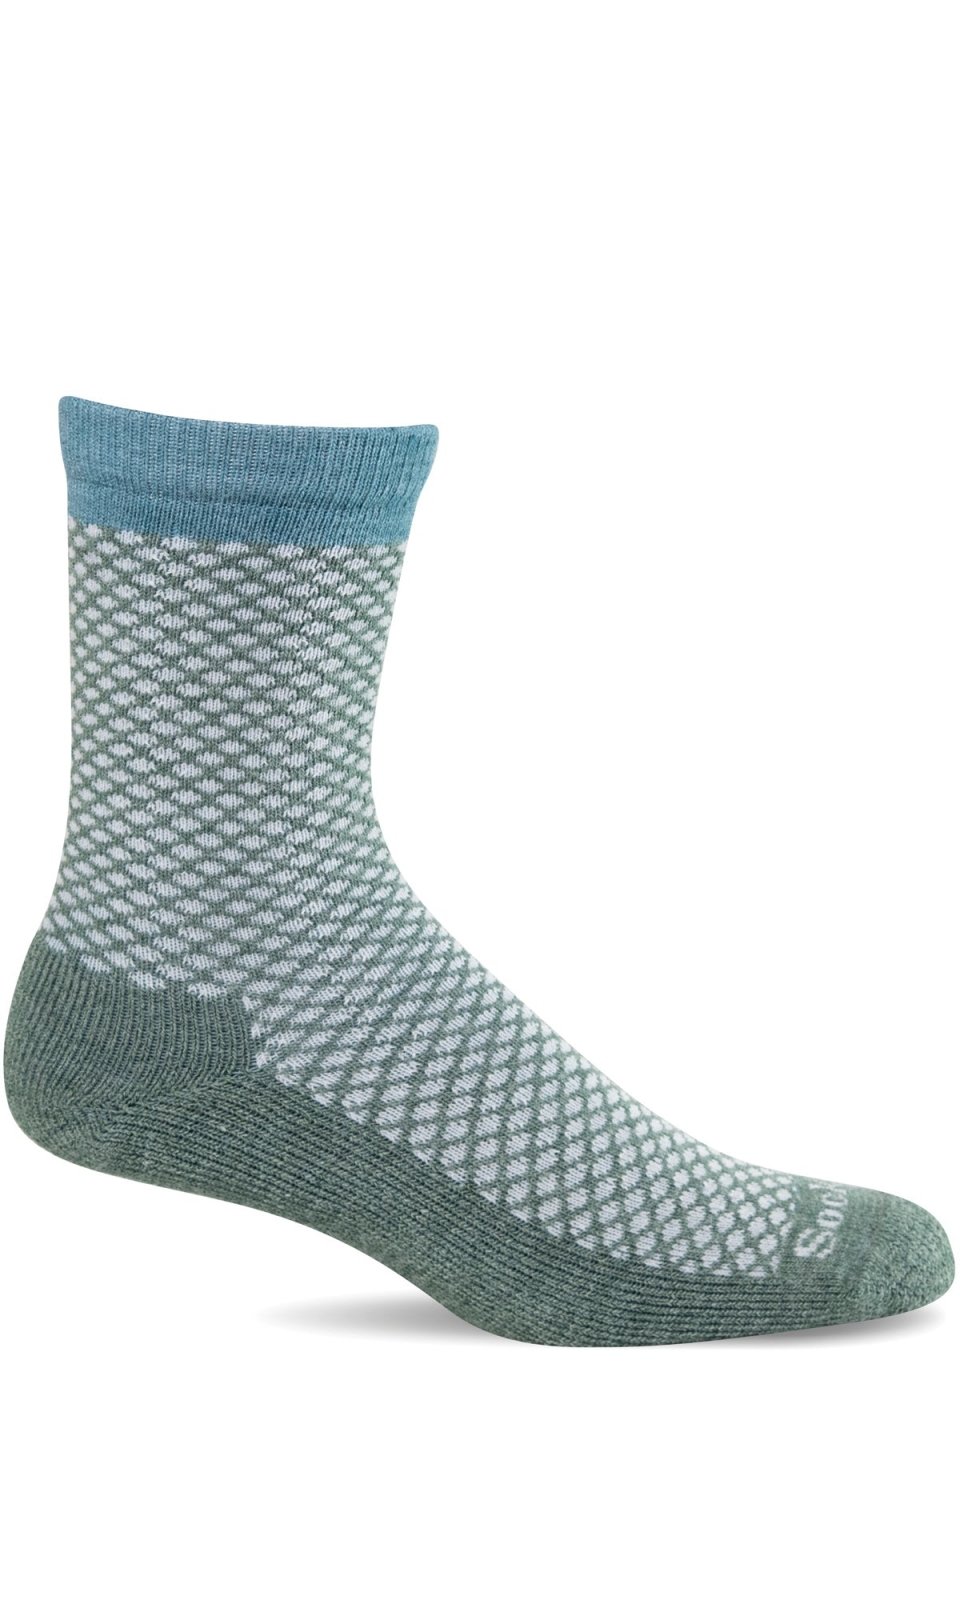 Women's Pebble | Essential Comfort Socks - Merino Wool Essential Comfort - Sockwell